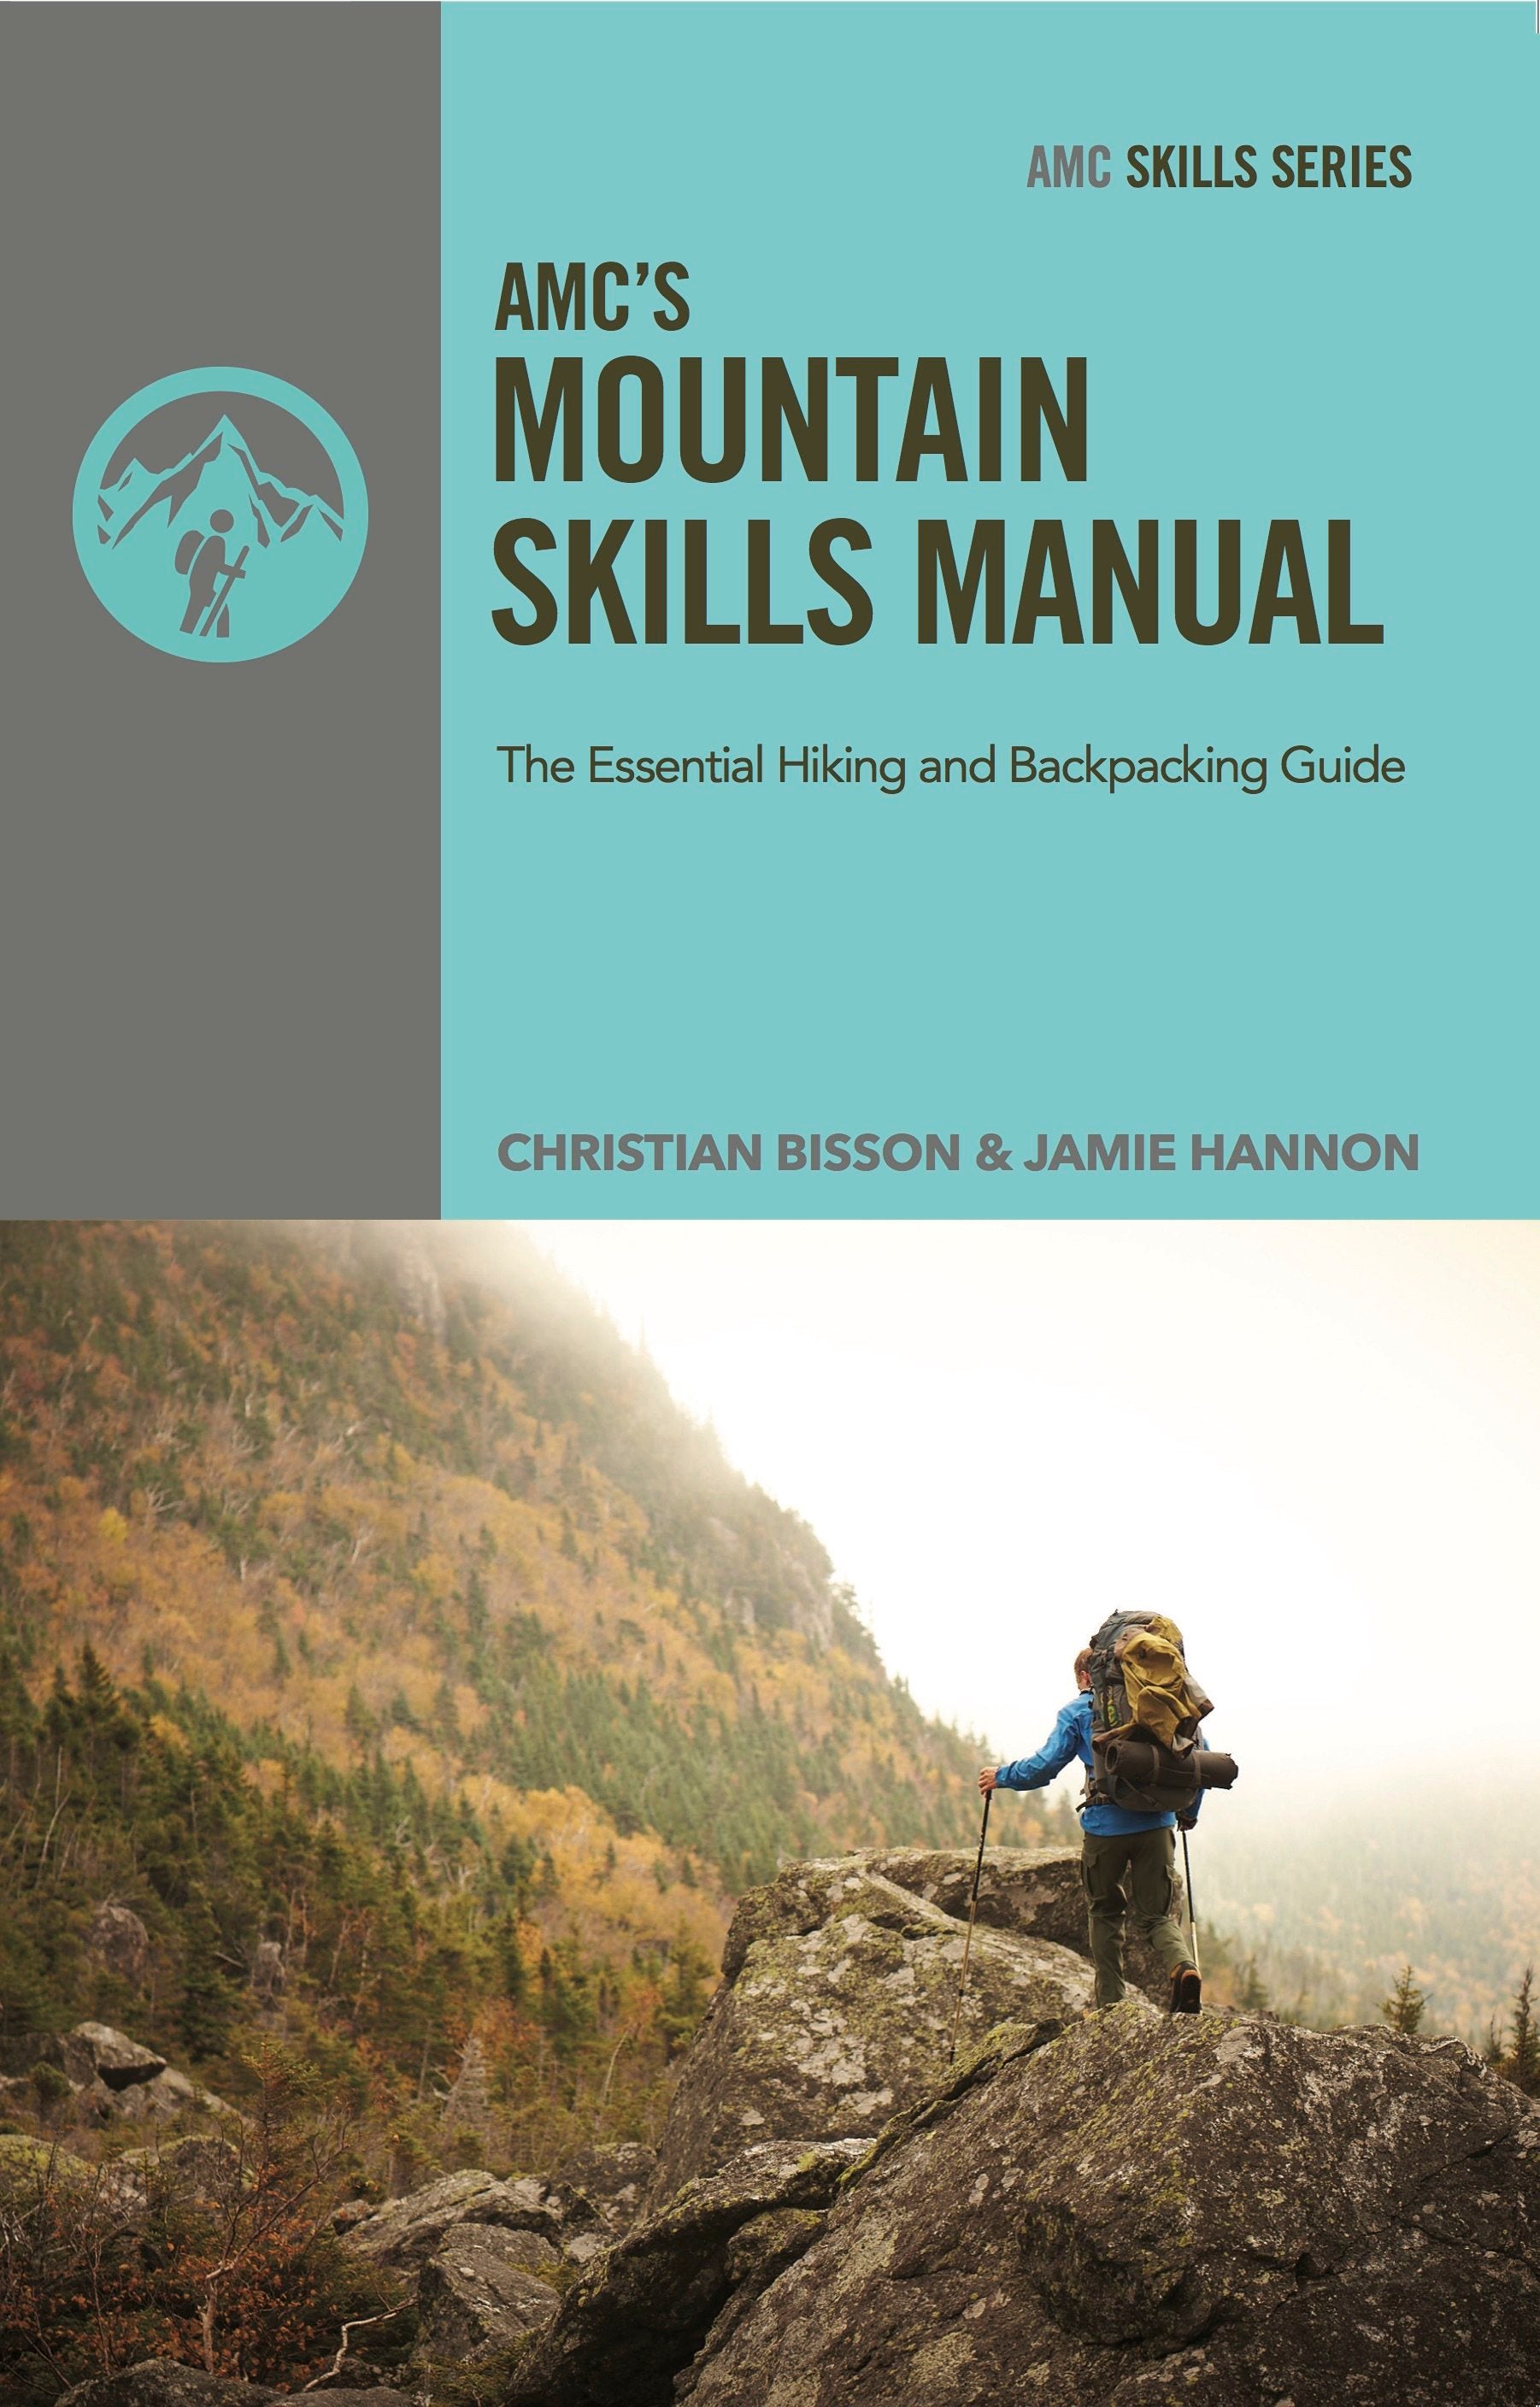 AMC's Mountain Skills Manual